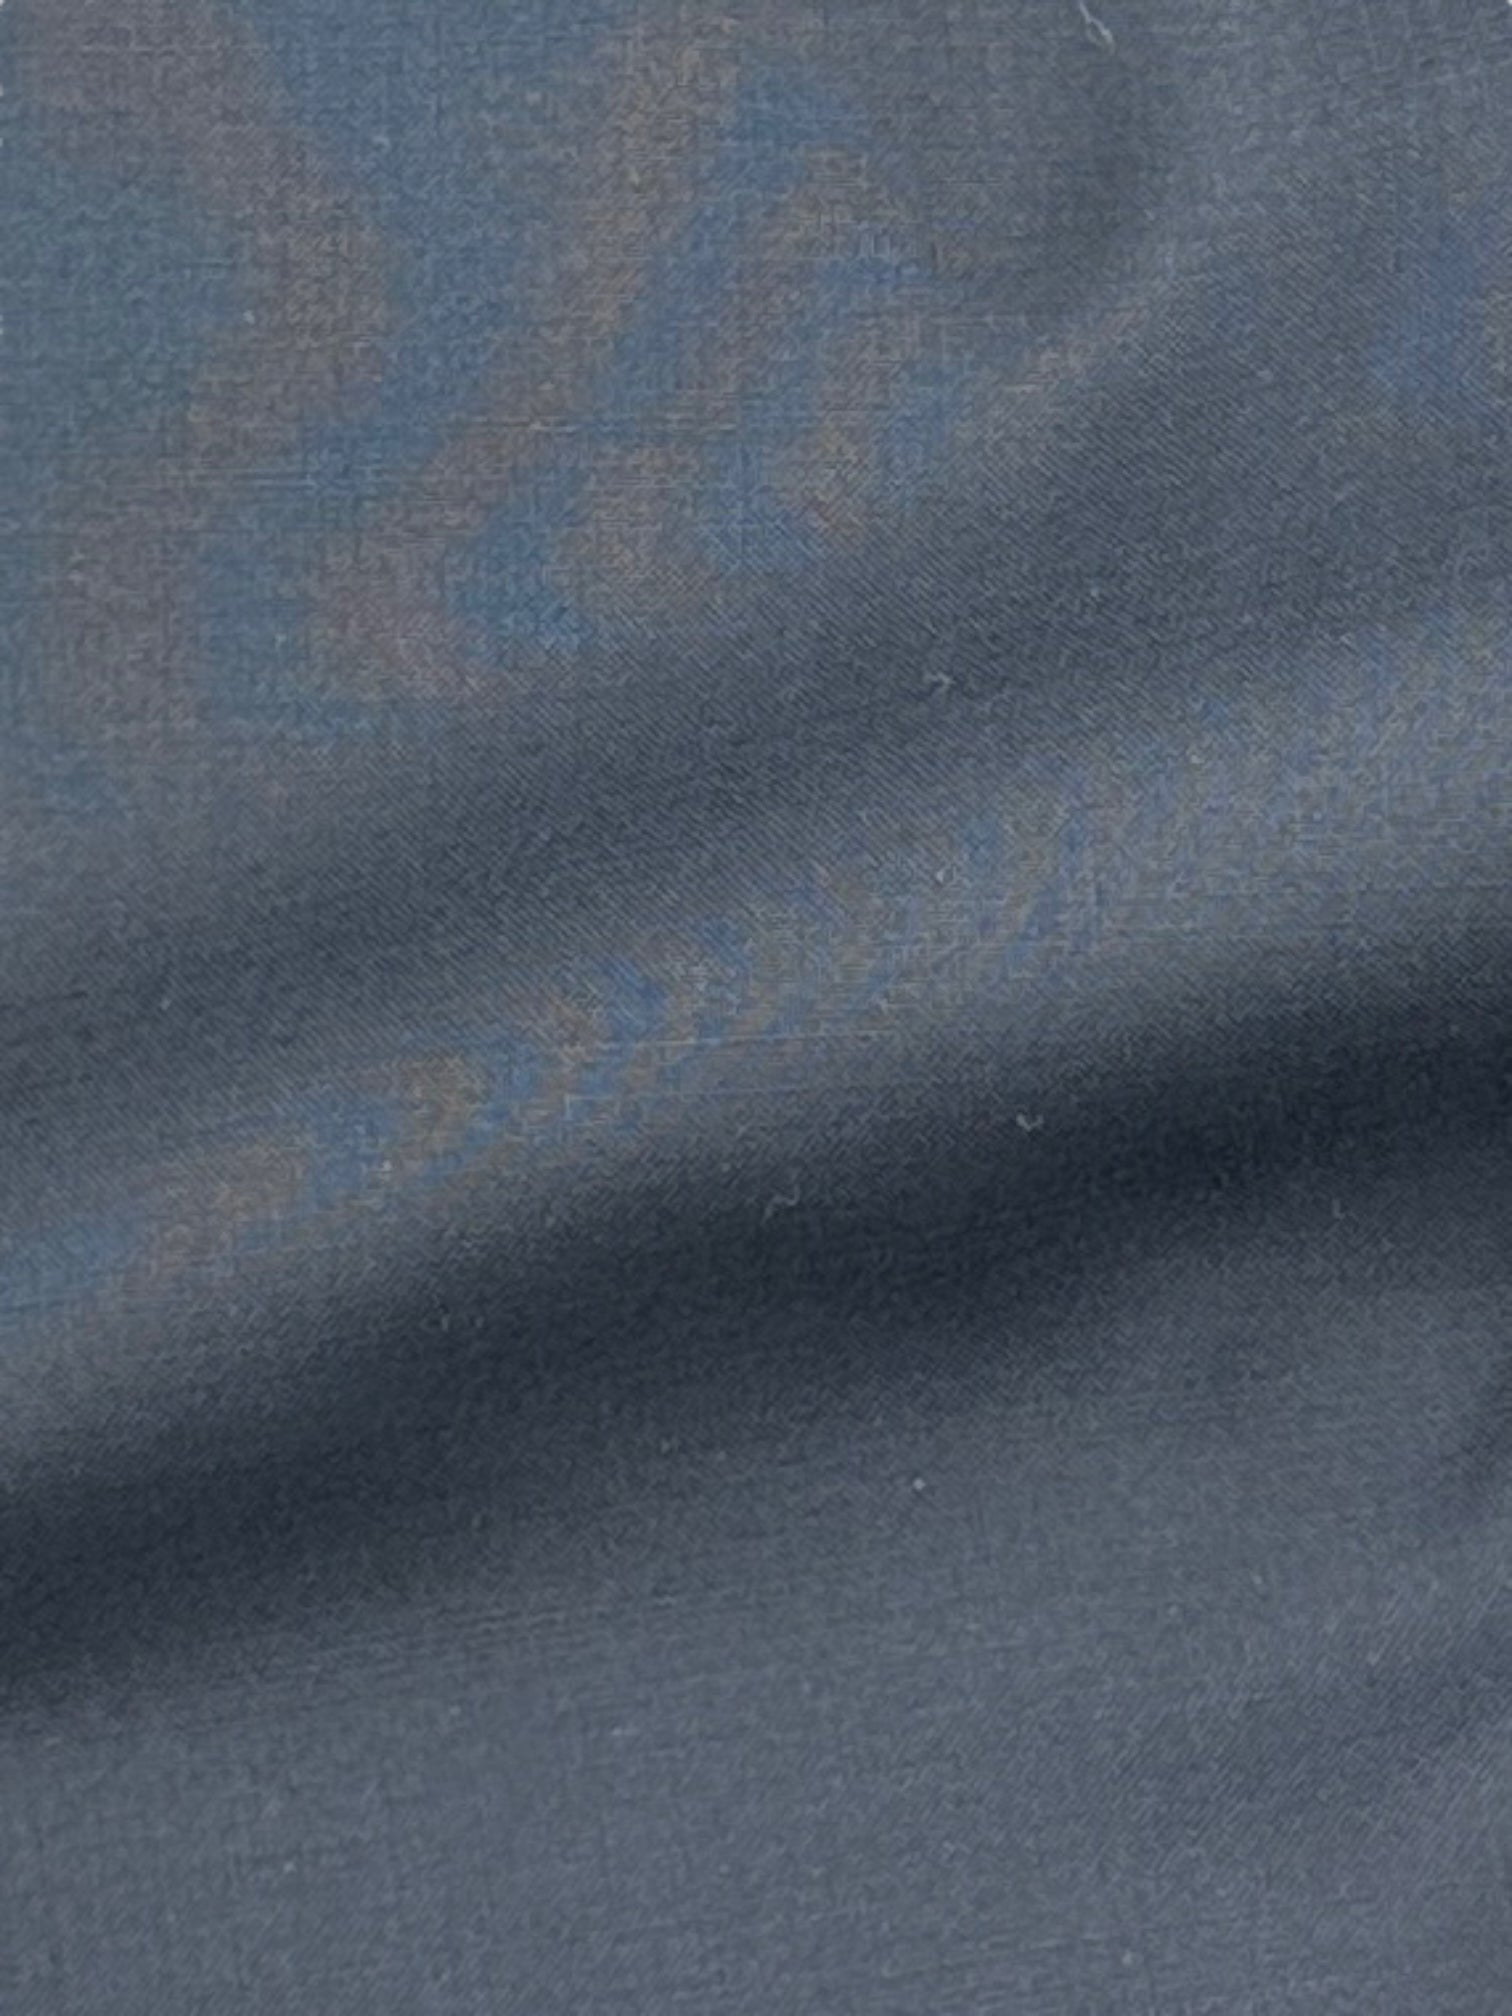 Perscarolo marineblauwe broek